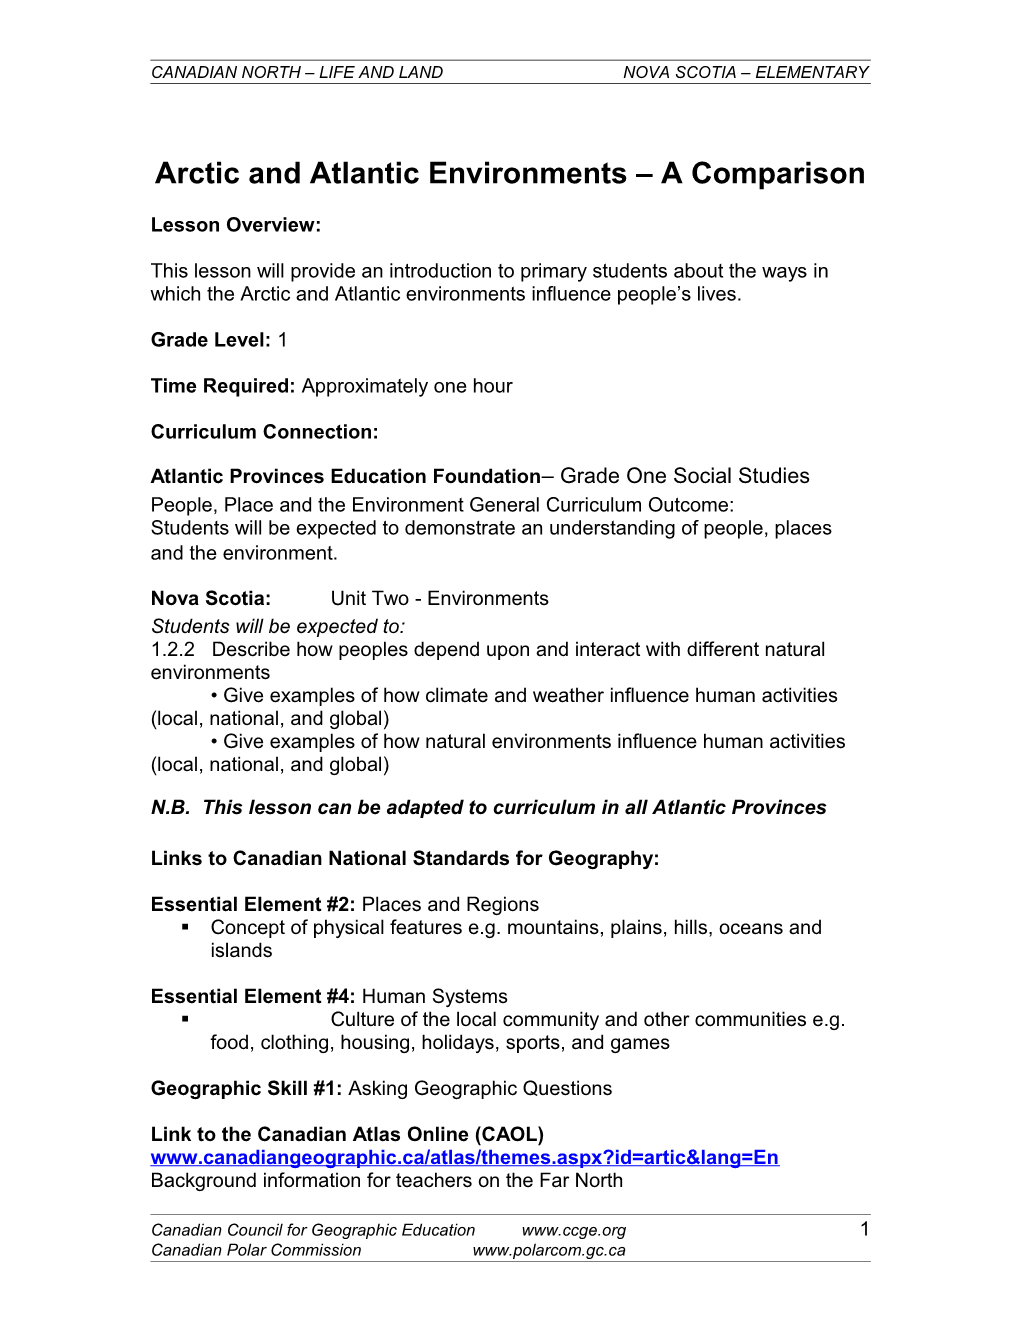 Arctic and Atlantic Environments a Comparison